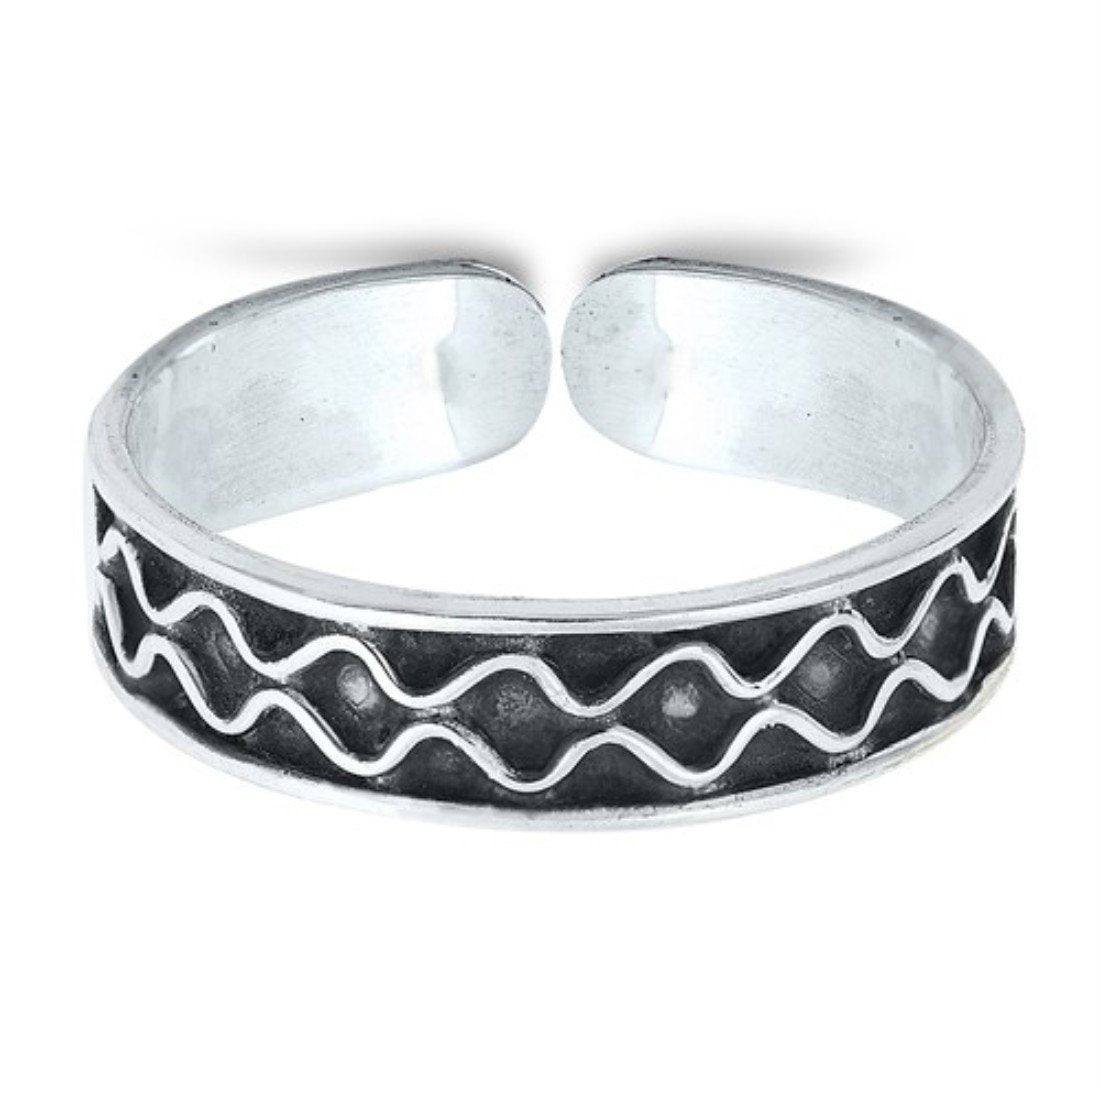 Bali Design Adjustable Silver Toe Ring Band 925 Sterling Silver (4mm)